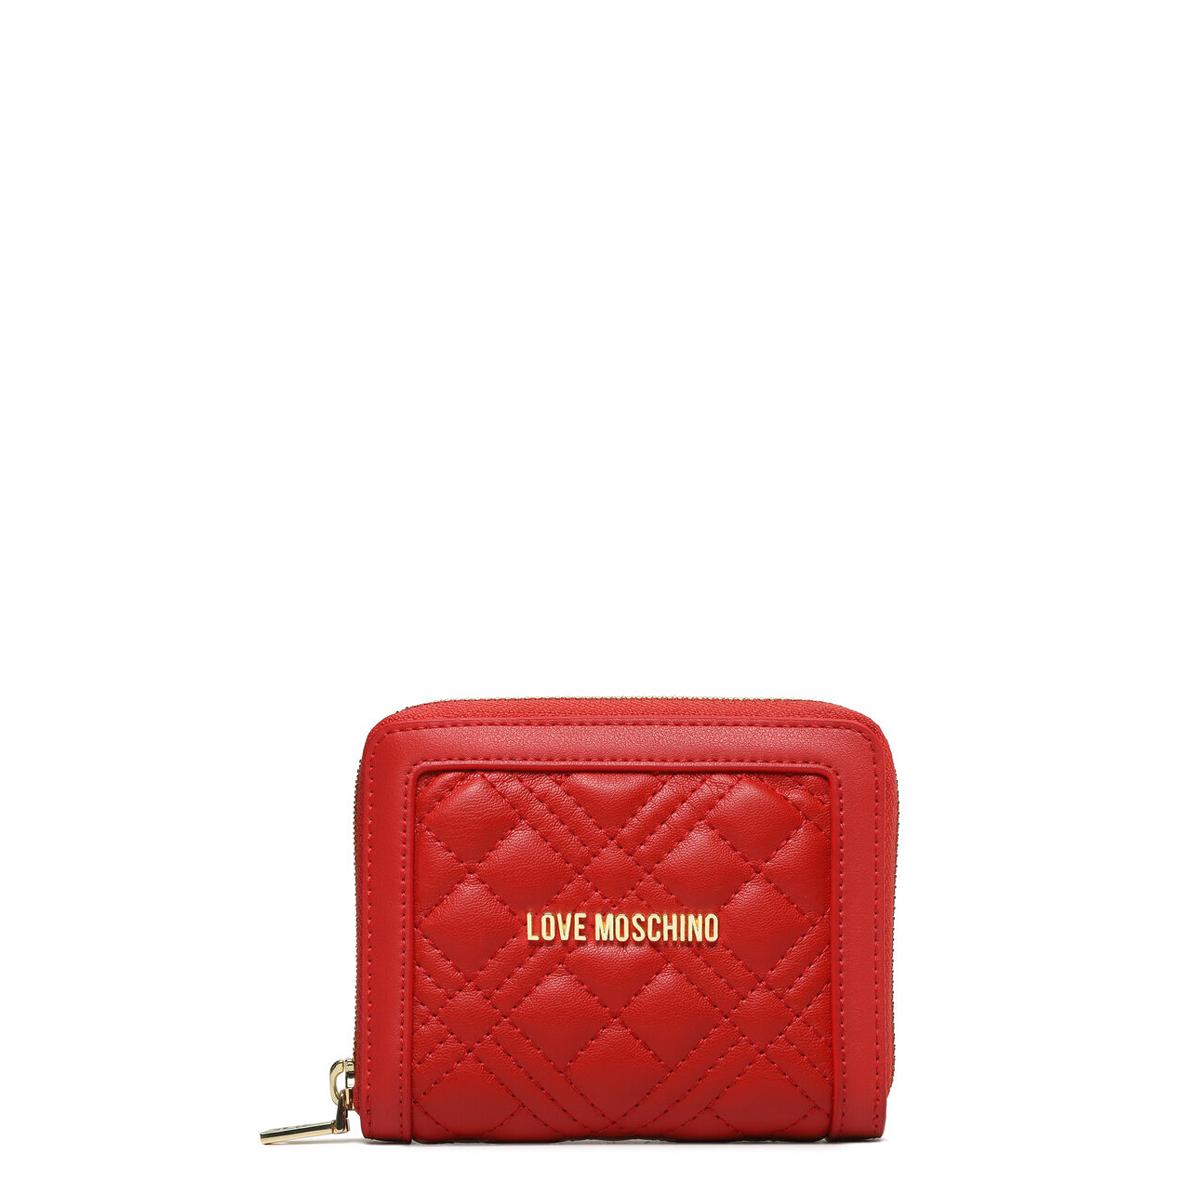 Love Moschino Women's Red Wallet